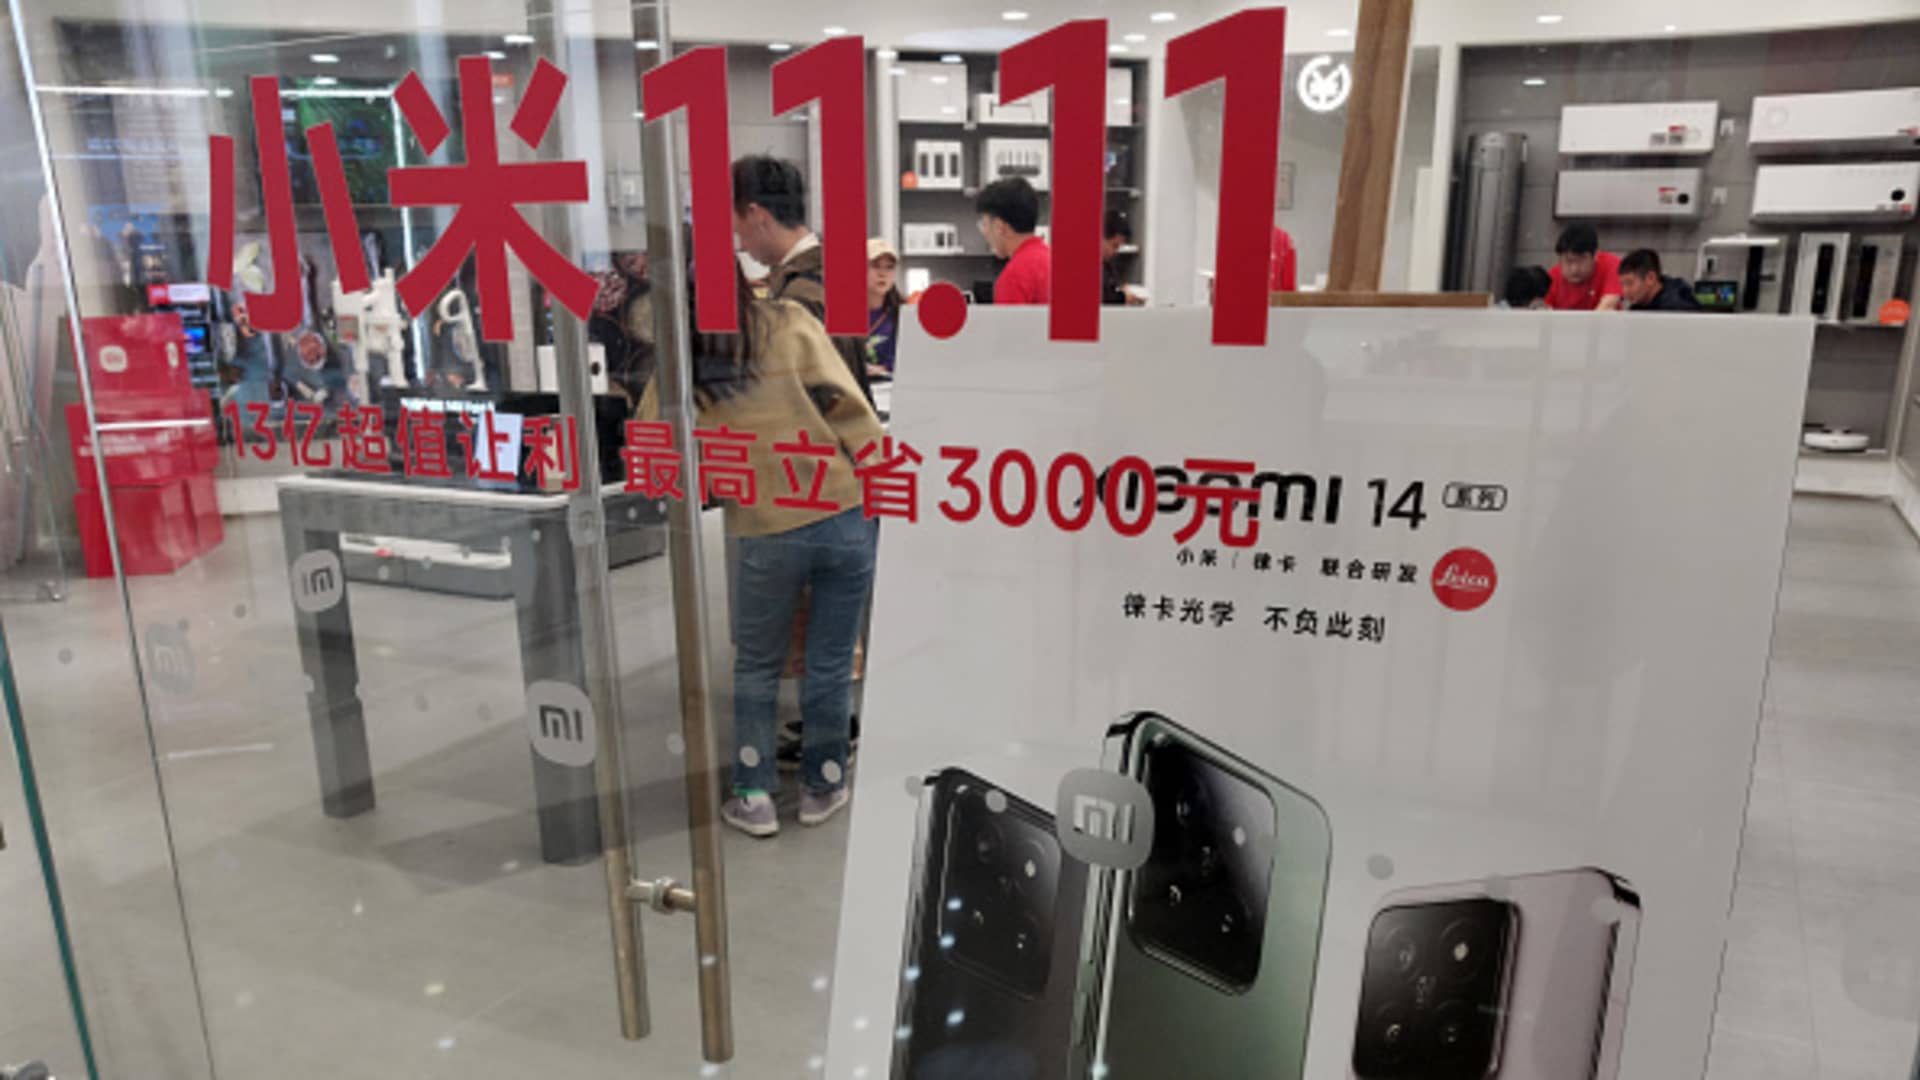 Xiaomi claims a record $3.11 billion in Singles Day sales